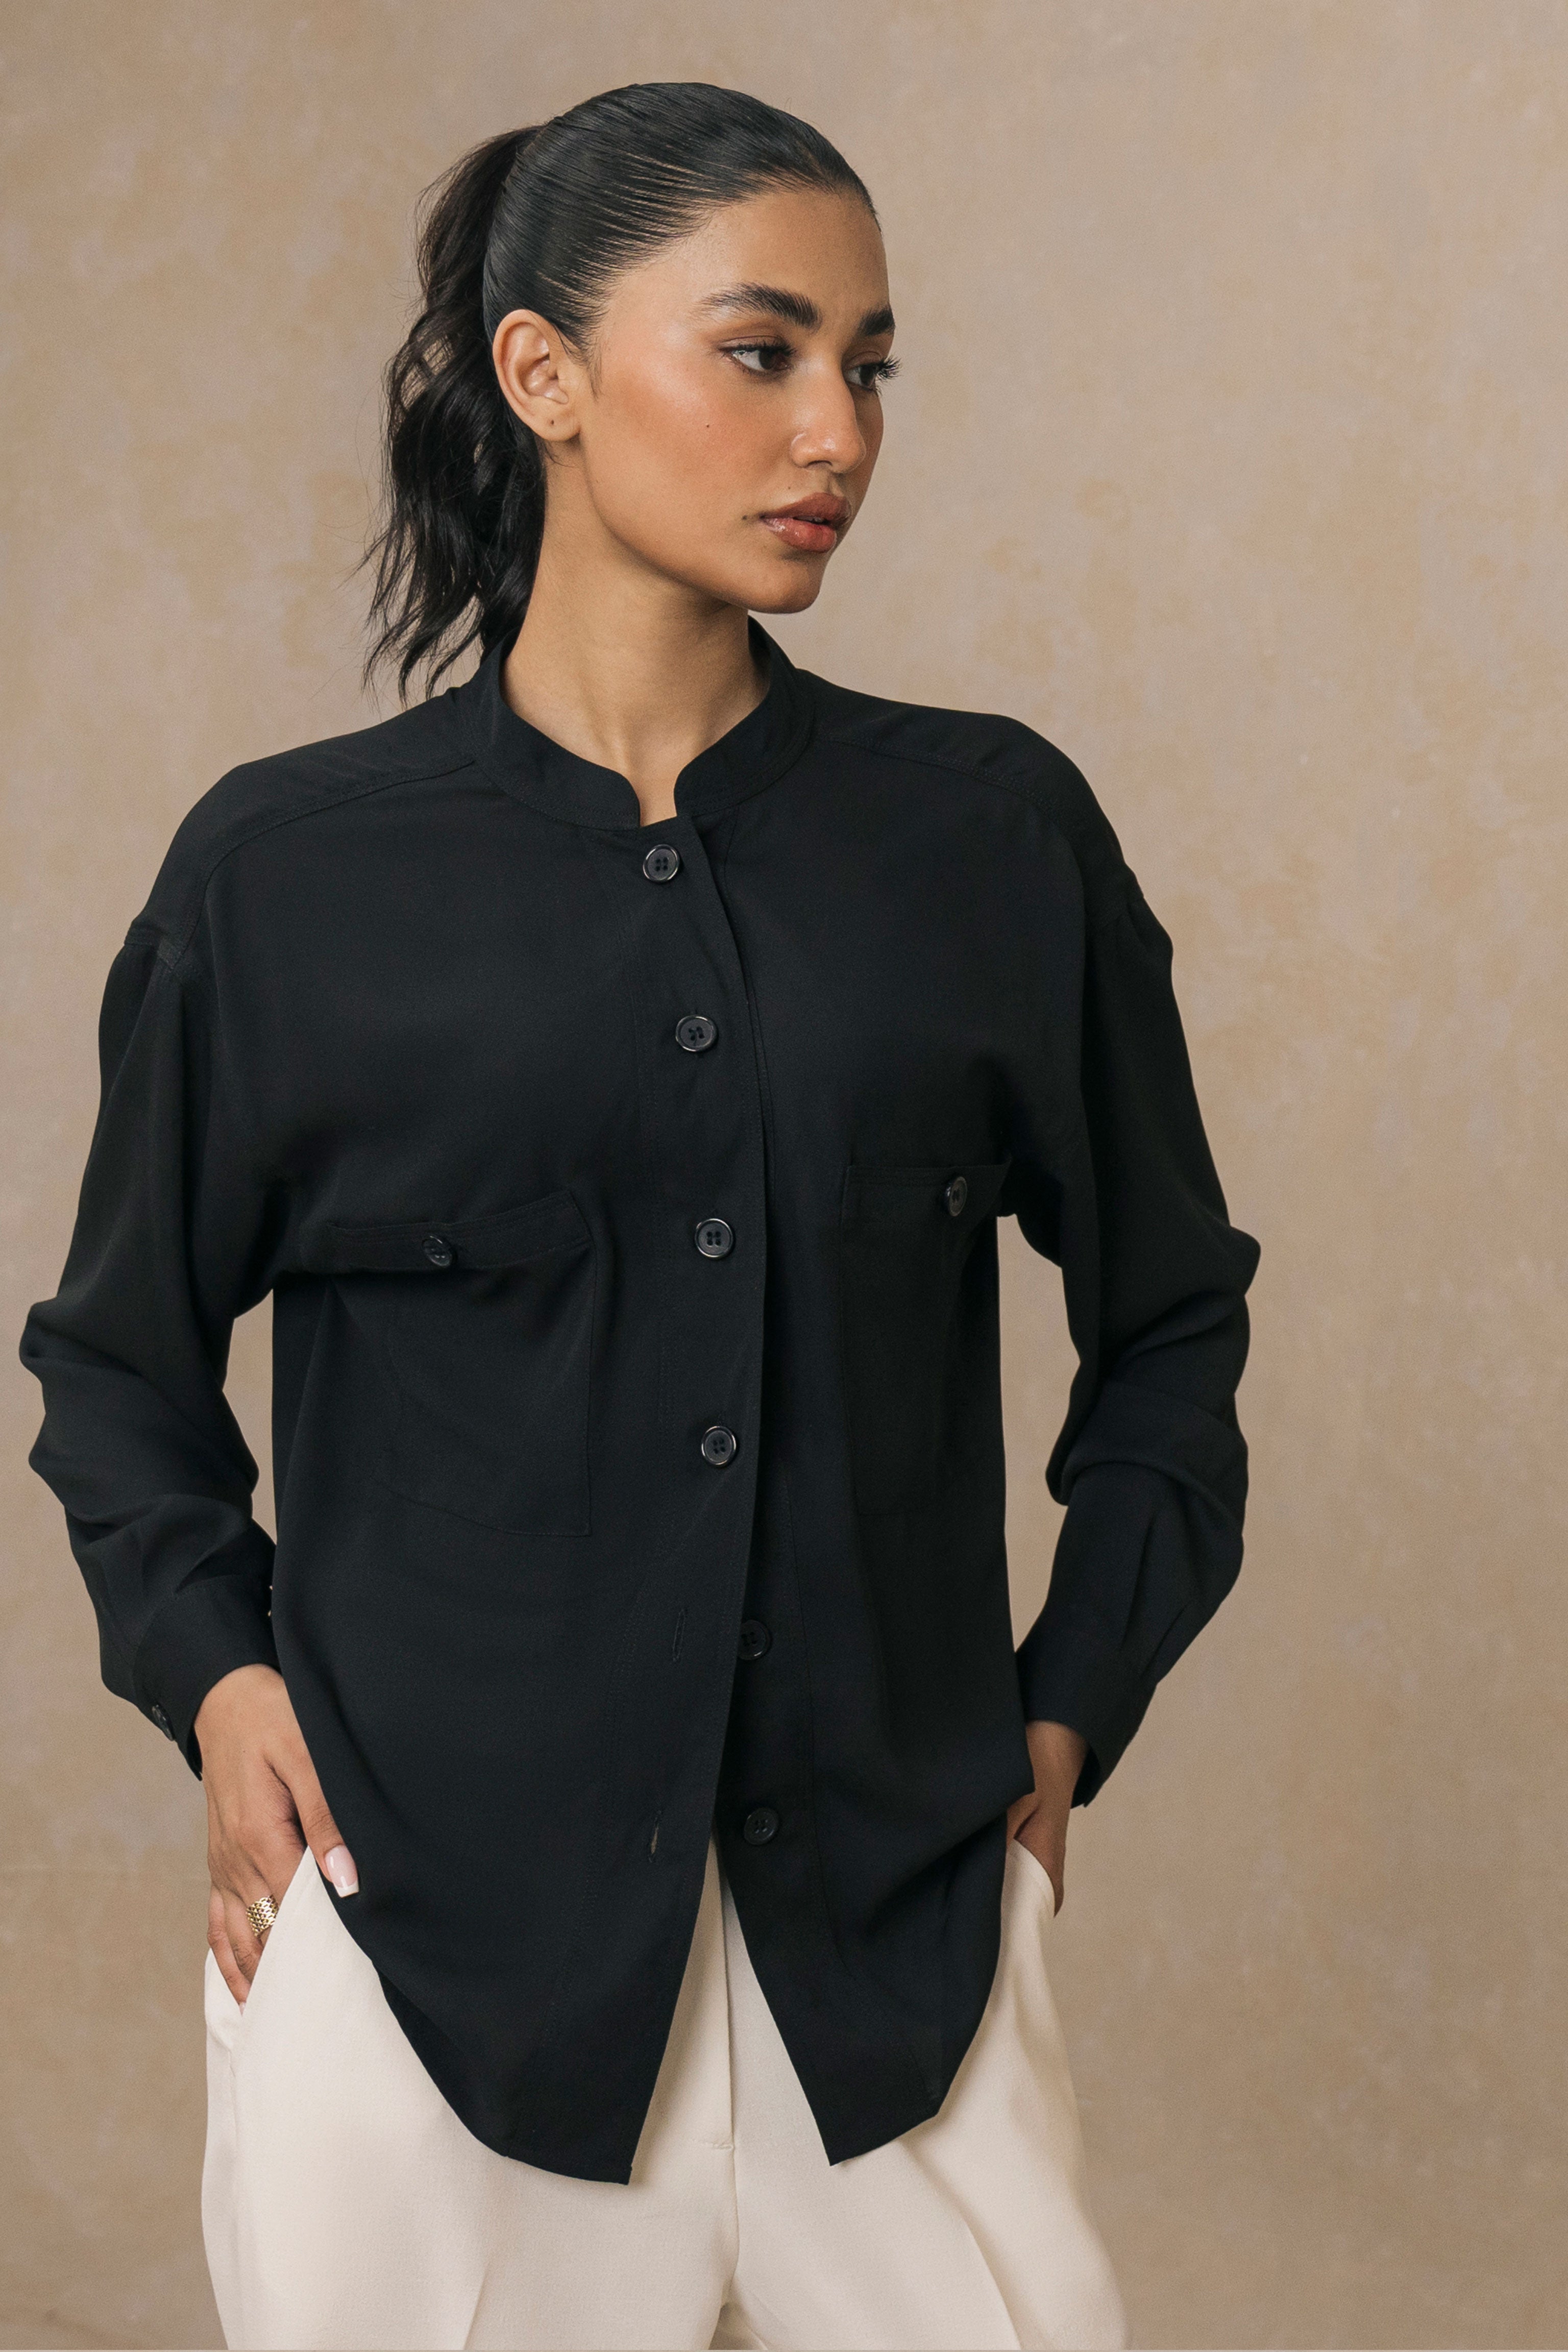 Black Shirt for women price